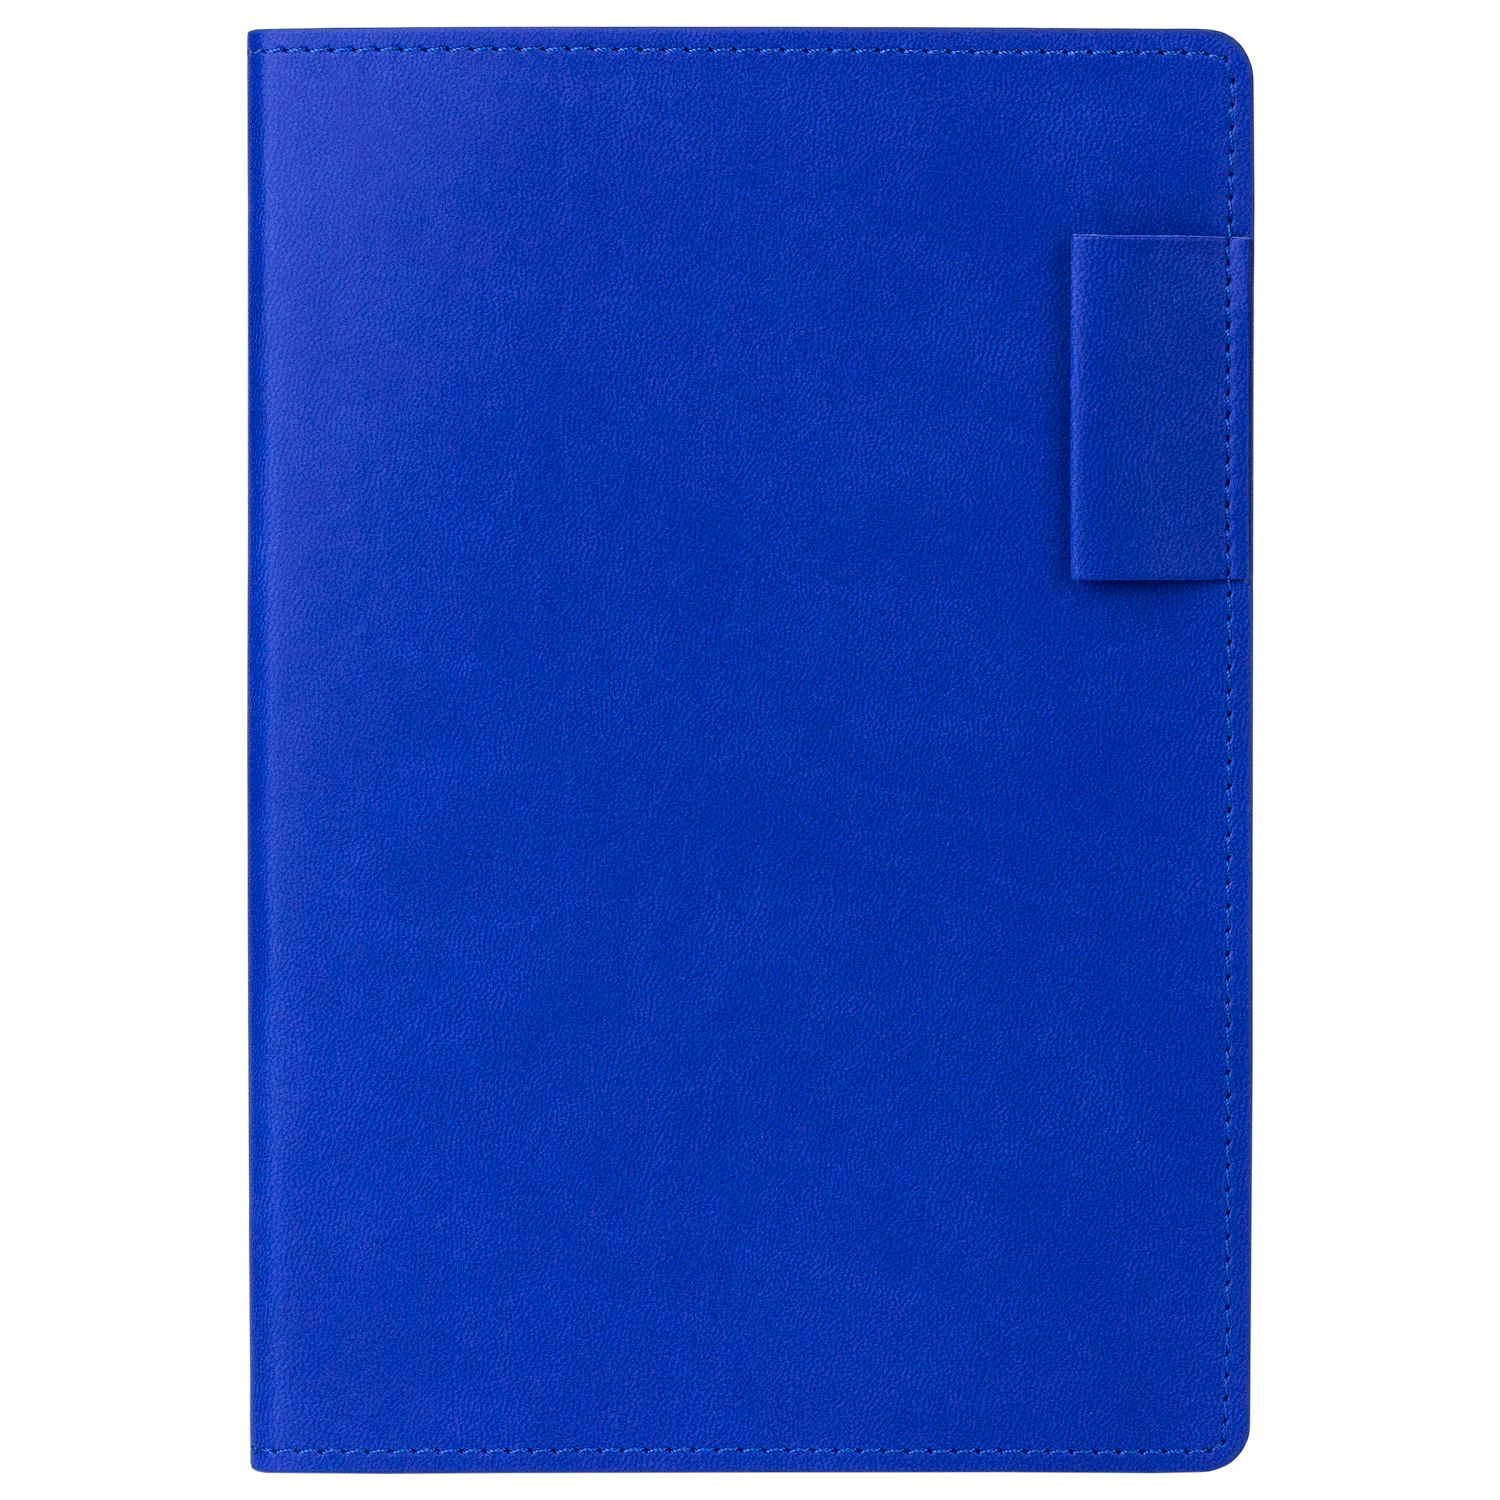 Артикул: A22254.130 — Ежедневник Portobello Trend, In Color Latte Ultramarine, недатированный, ярко-синий/серебро